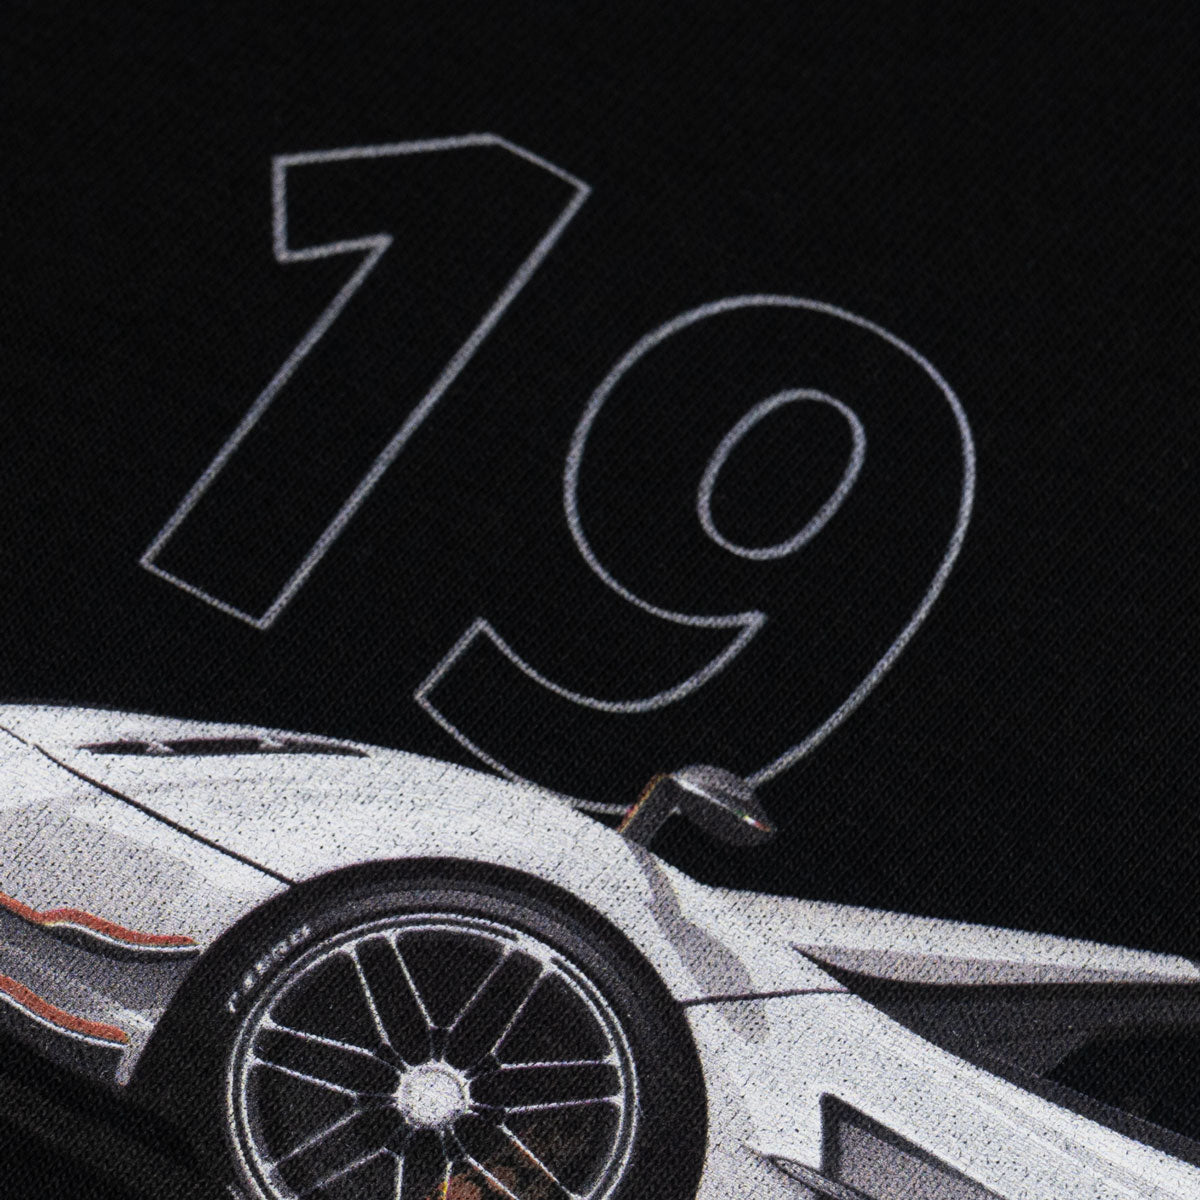 T-Shirt Huayra Roadster BC Black - 25th Anniversary